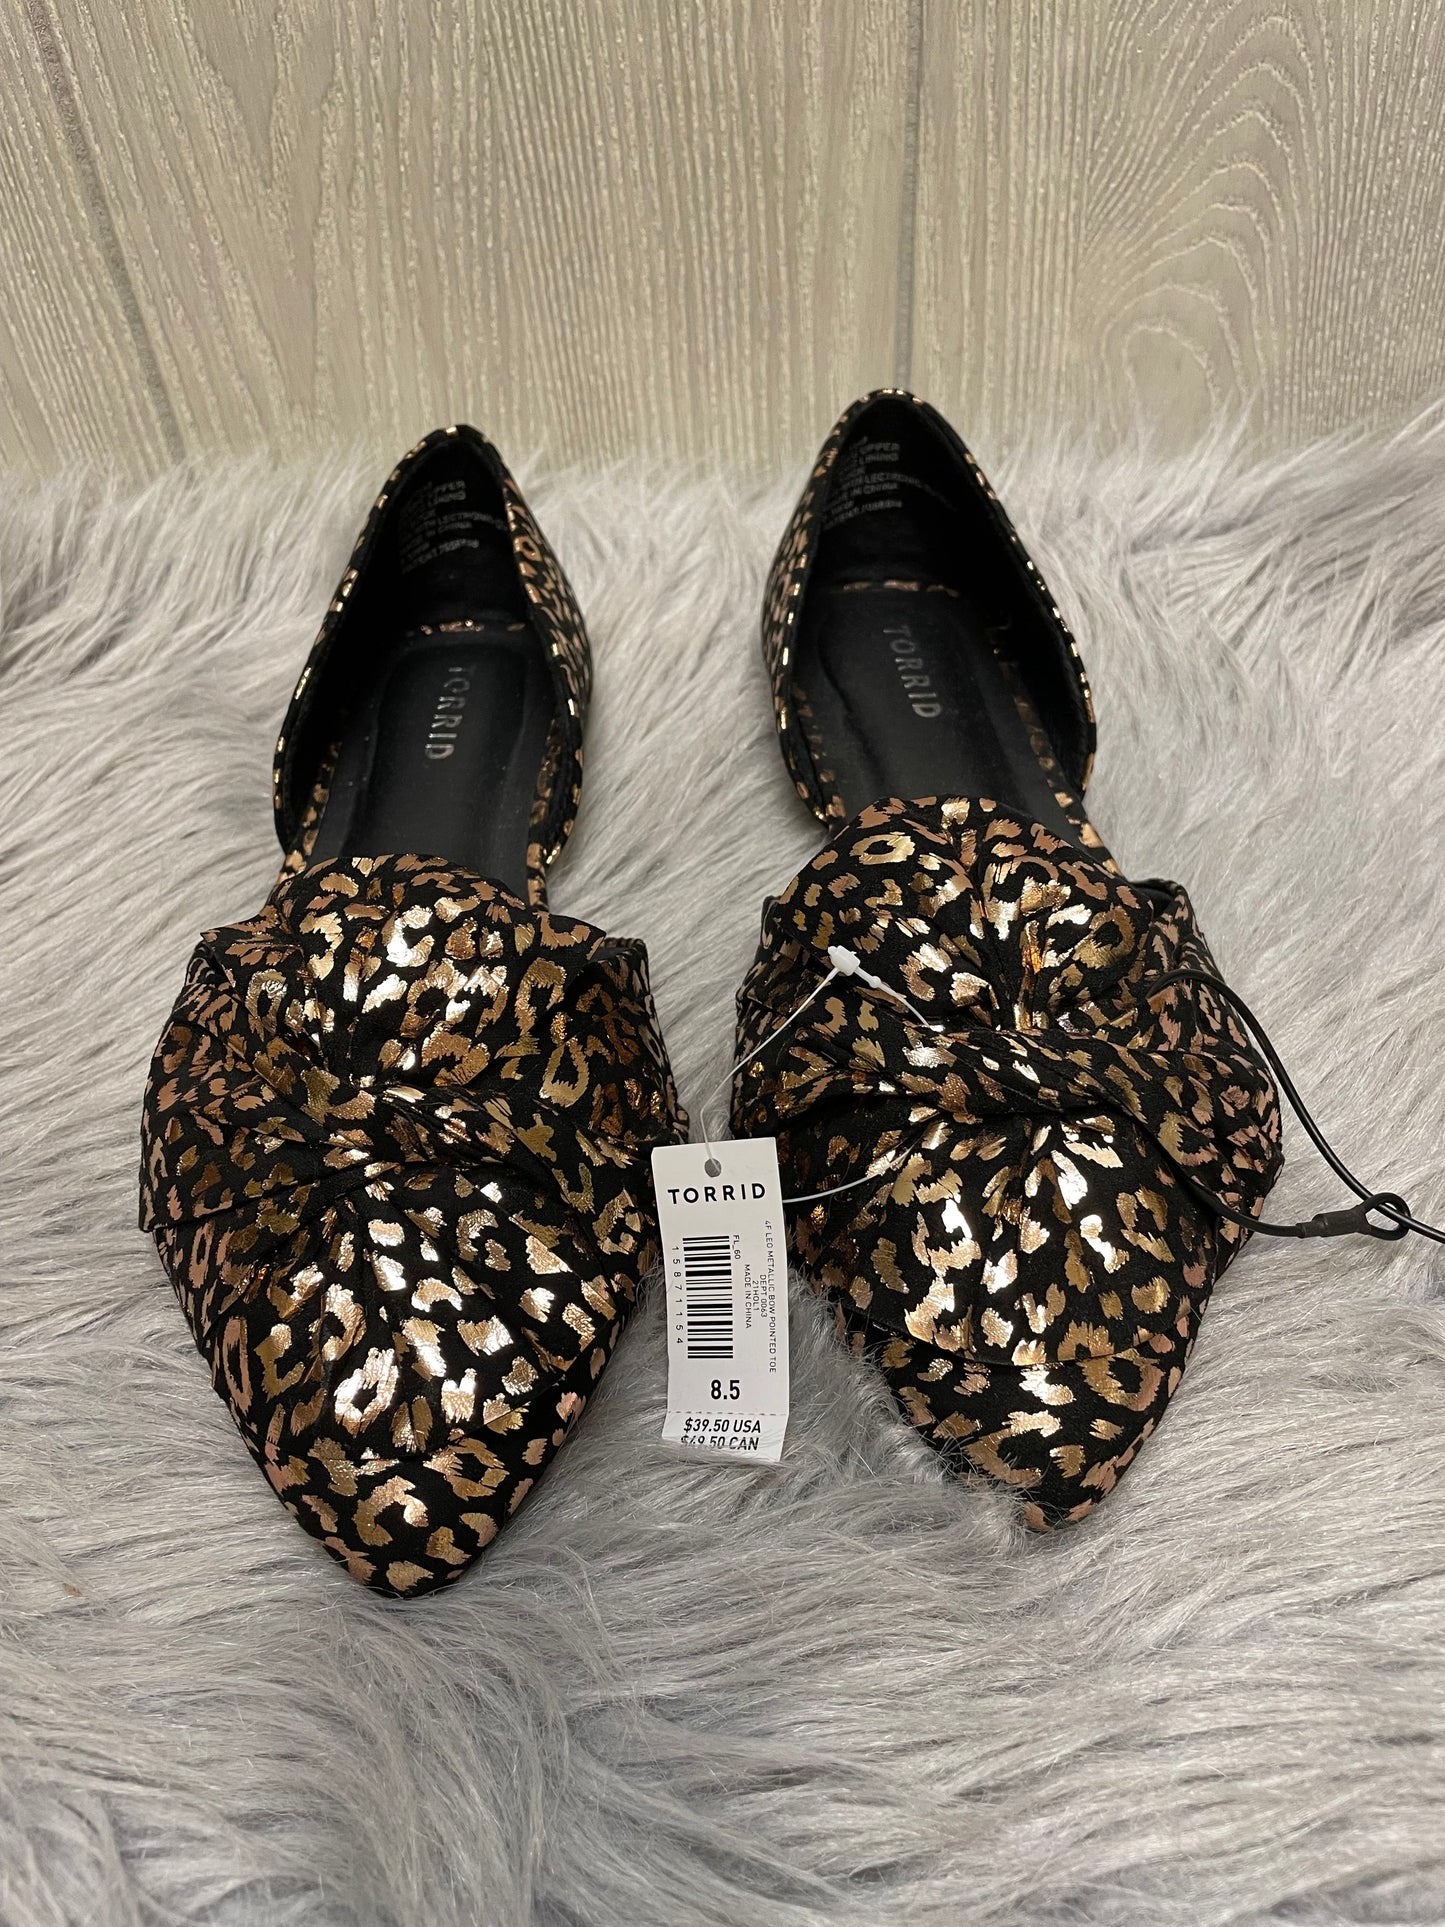 Black & Gold Shoes Flats Torrid, Size 8.5